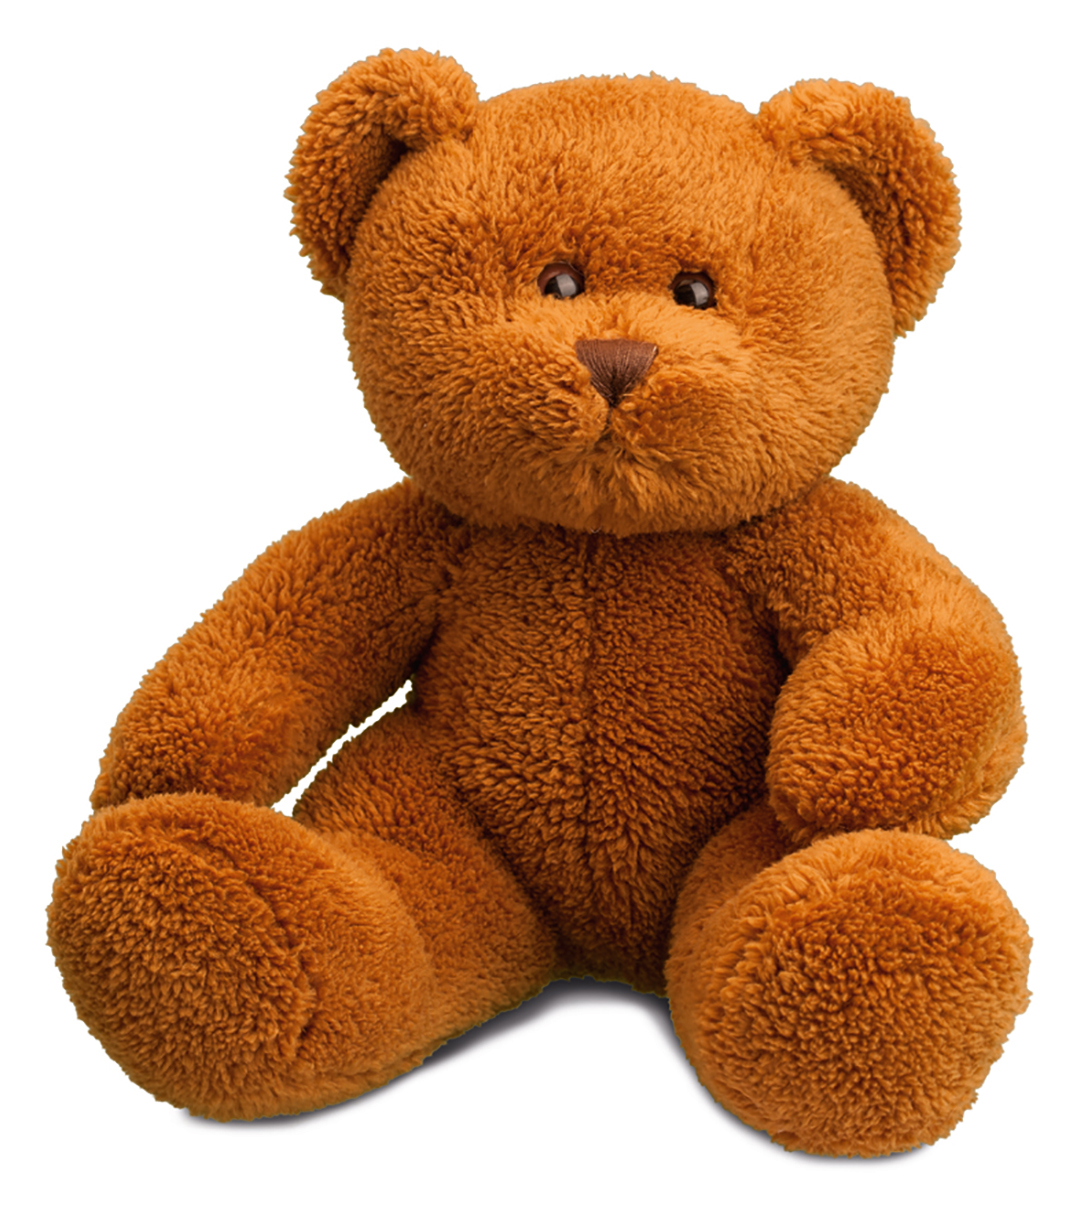 softplush teddy bear